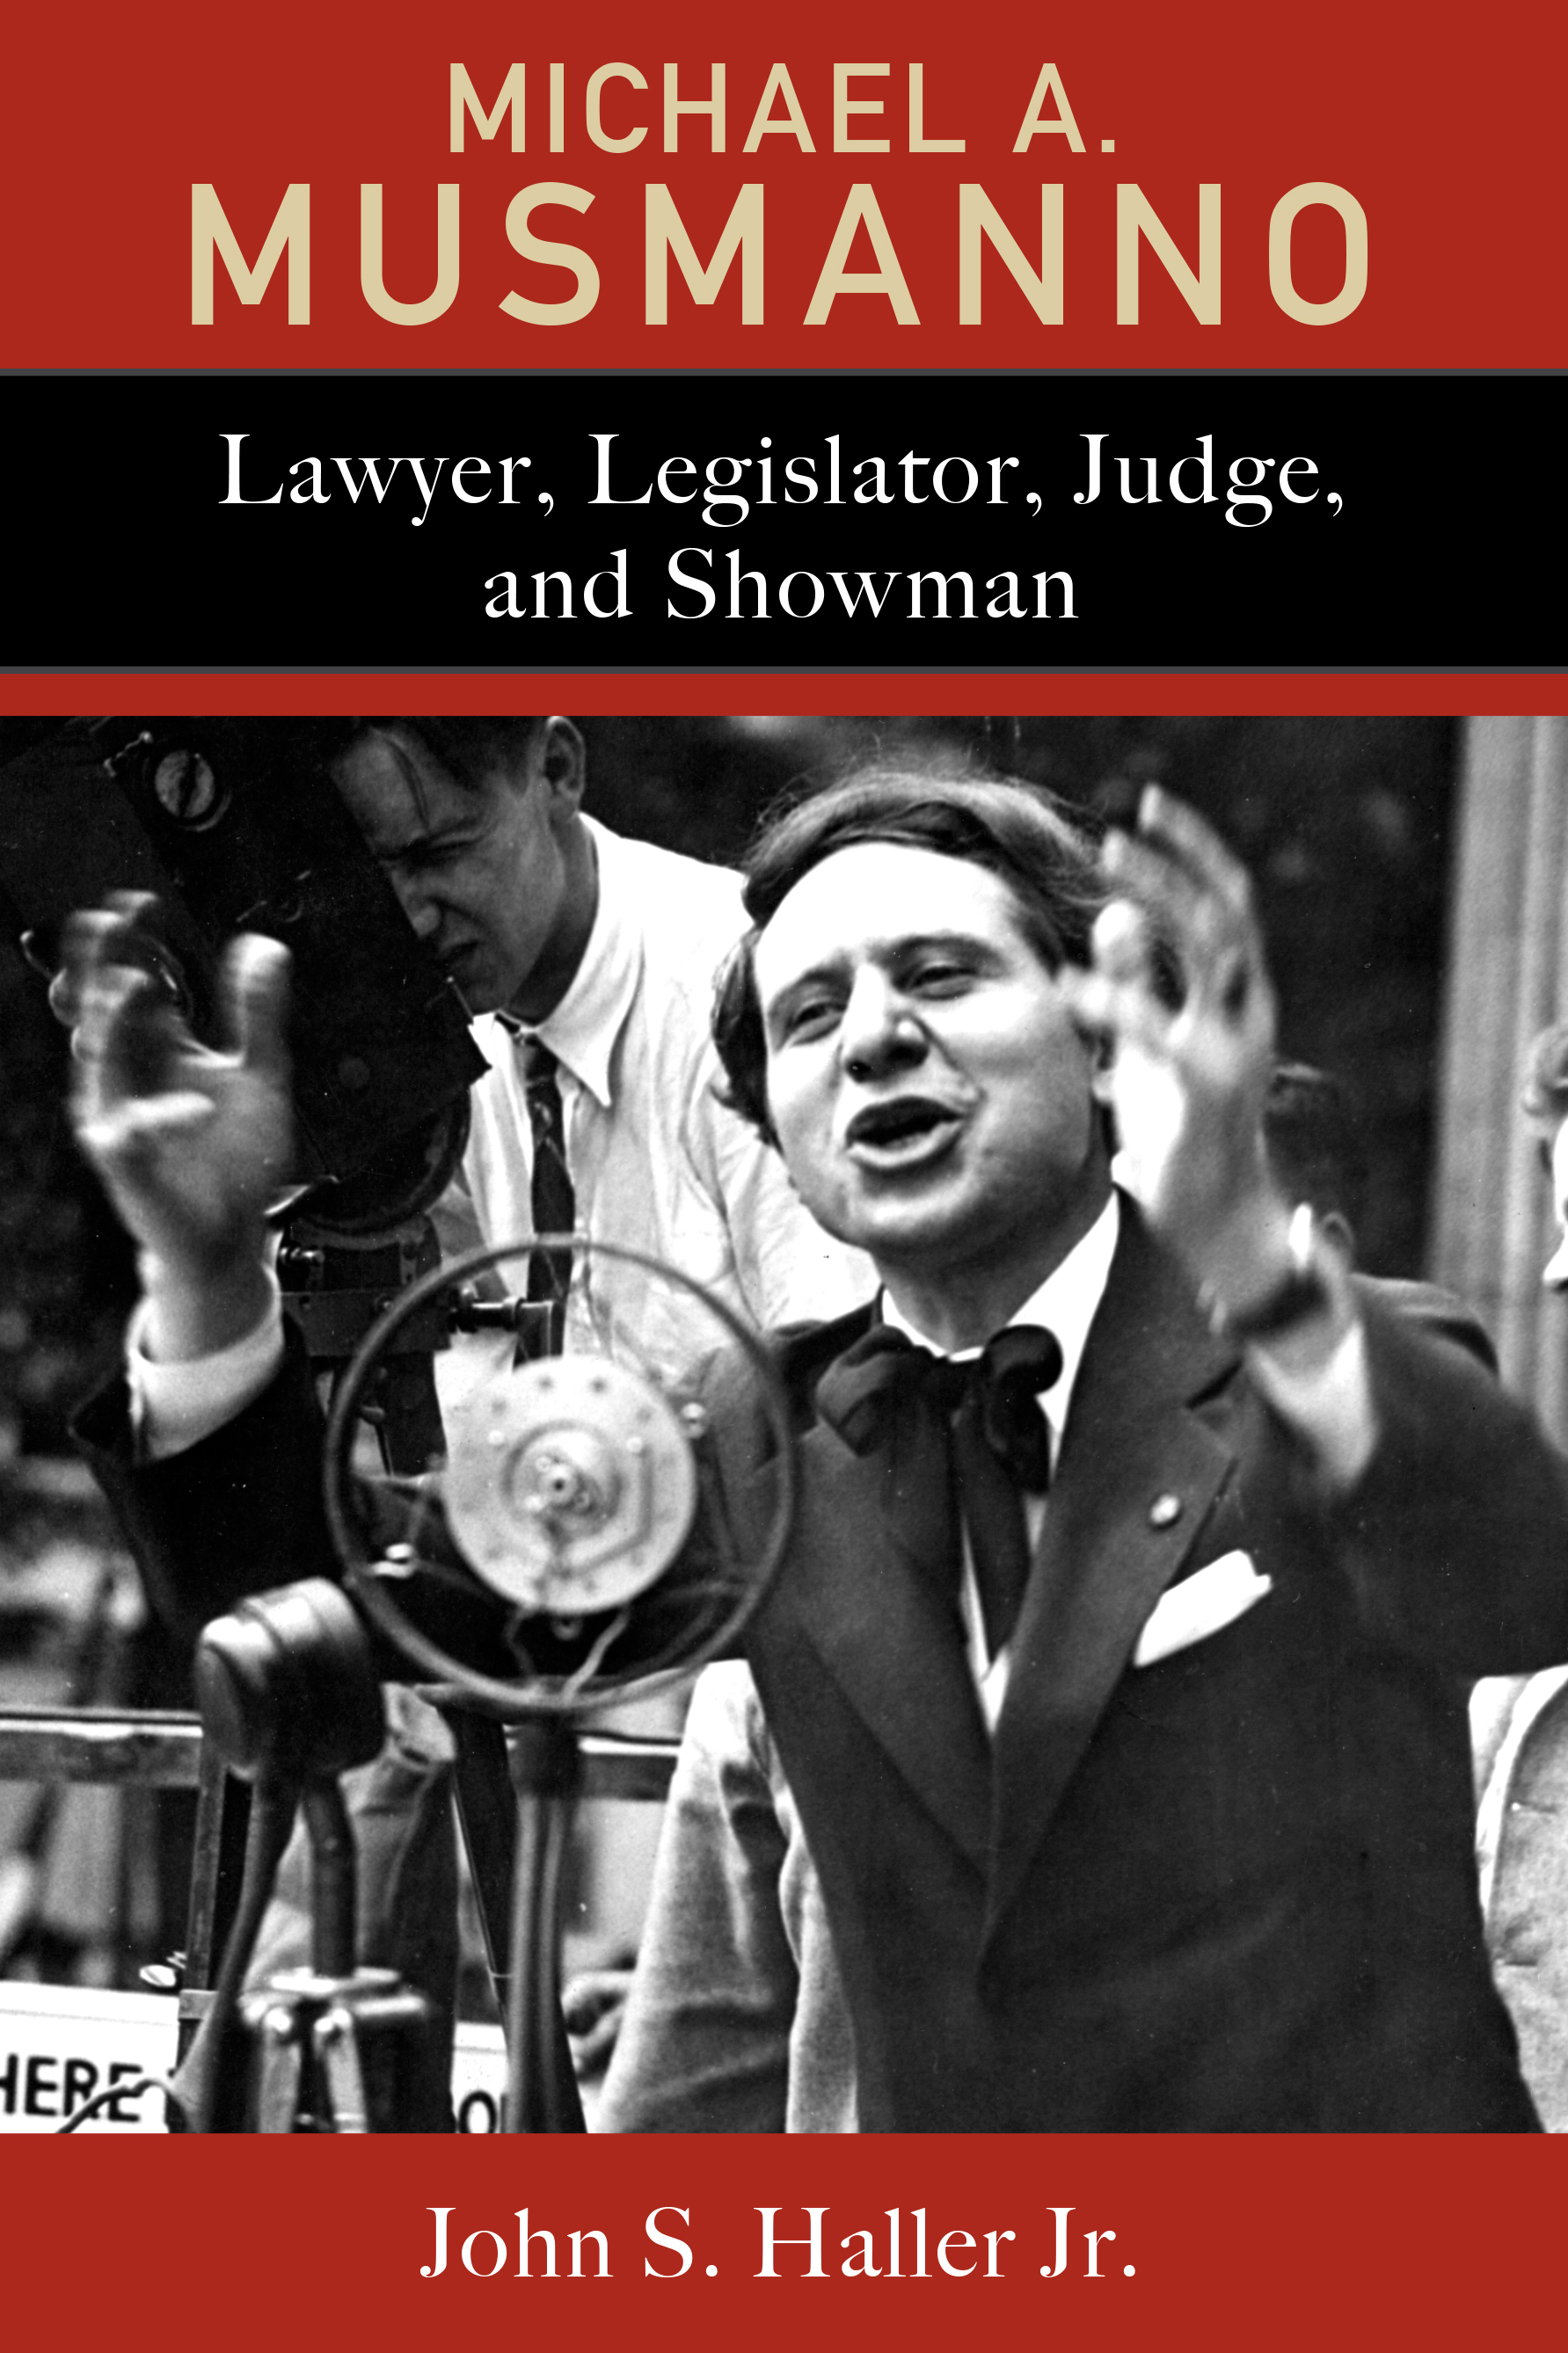 Michael A. Musmanno: Lawyer, Legislator, Judge, and Showman